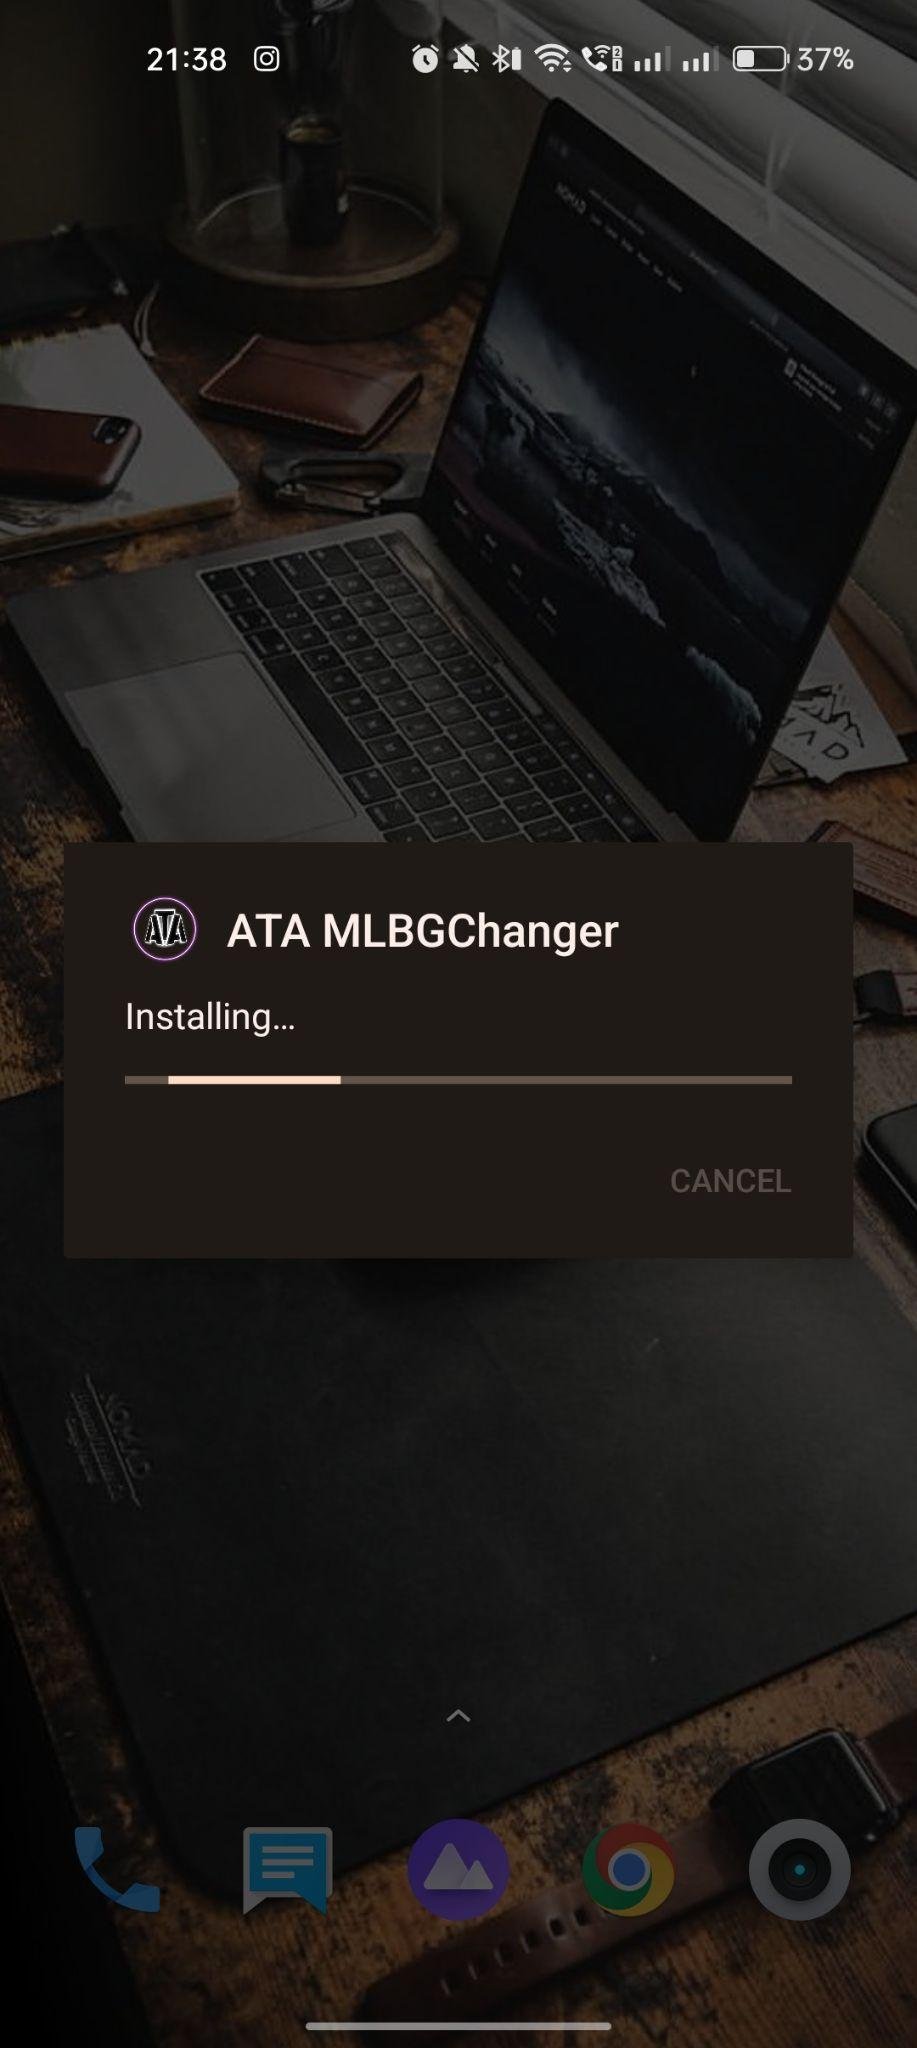 ATA MLBG Changer apk installing